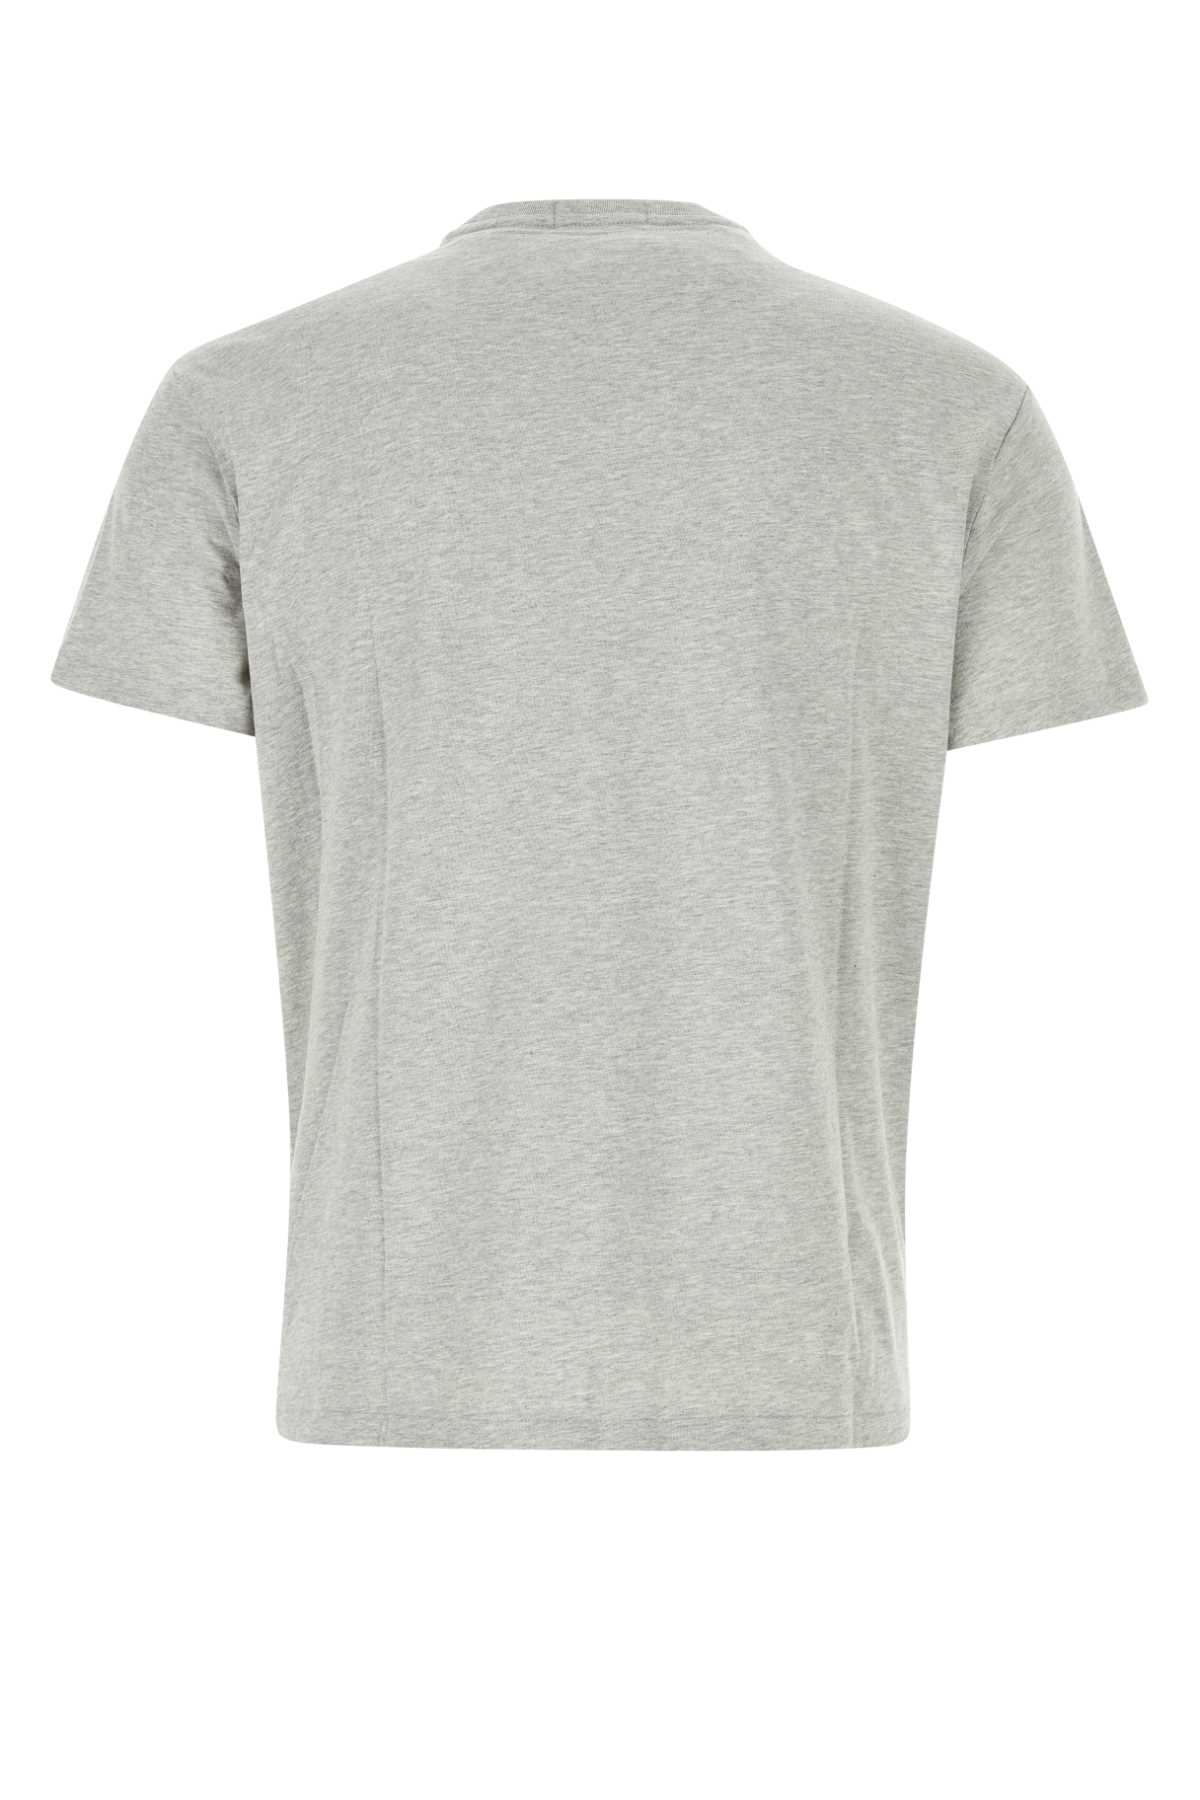 Polo Ralph Lauren Melange Grey Cotton T-shirt